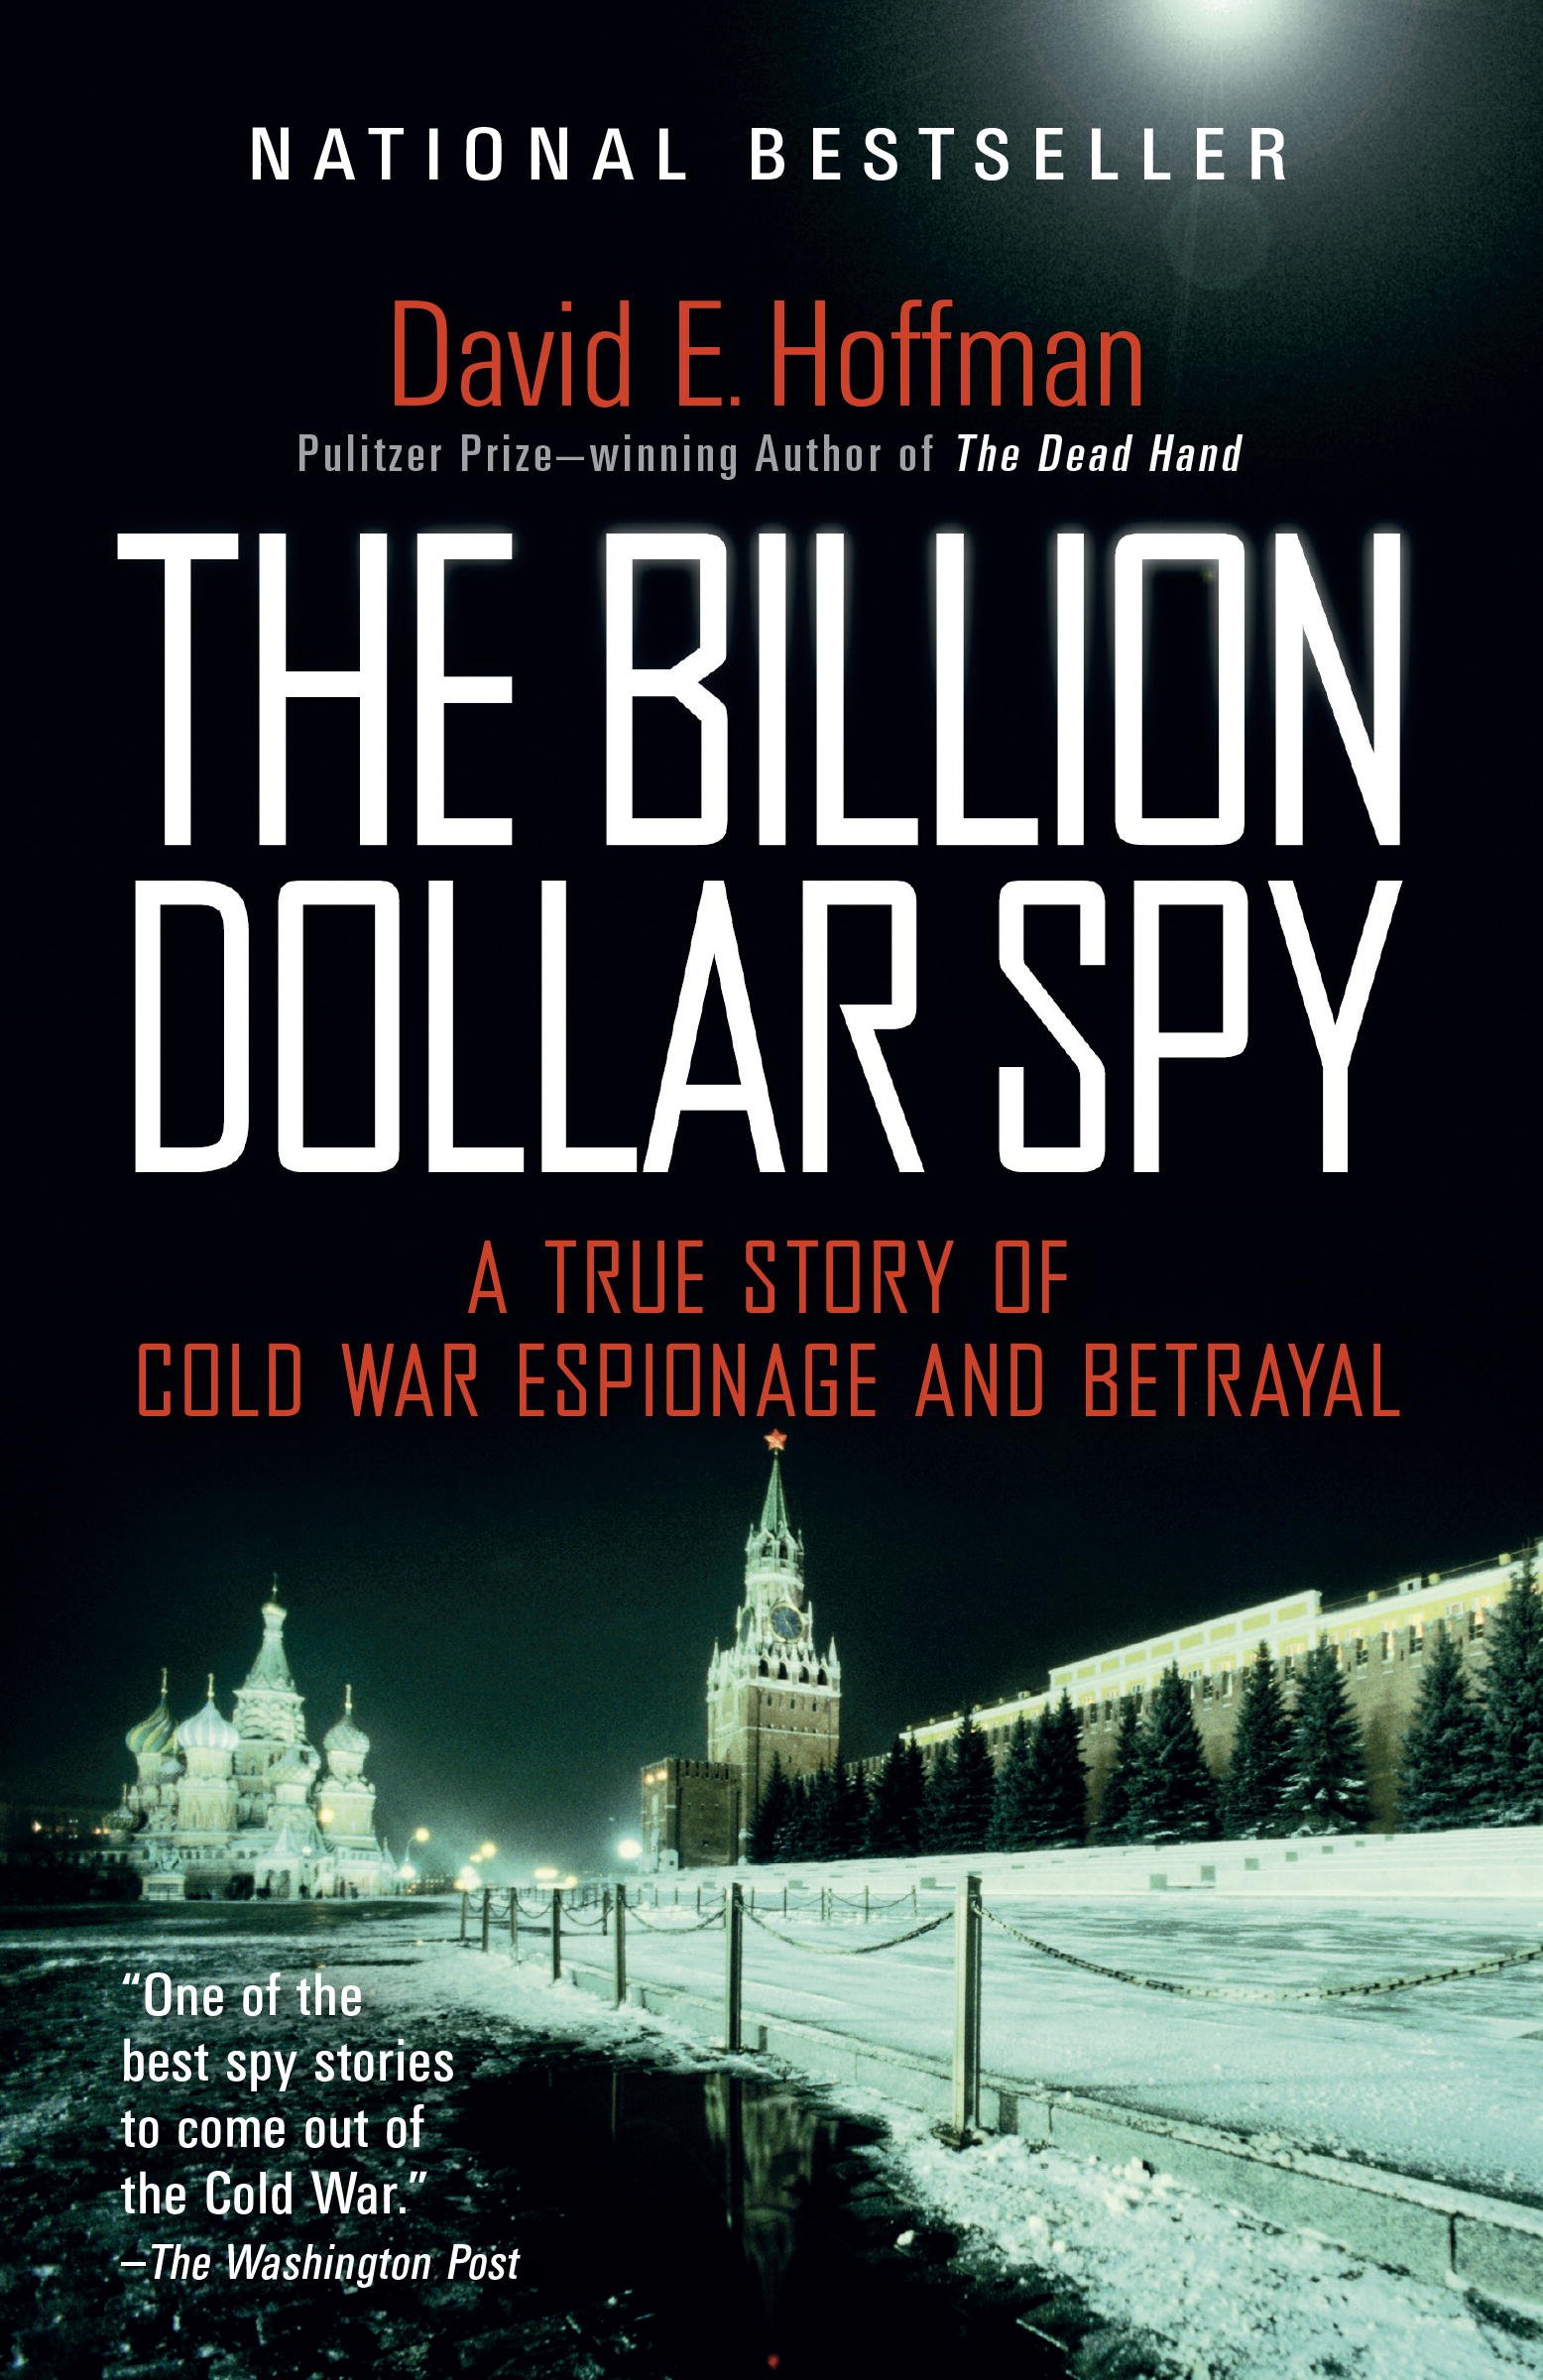 The Billion Dollar Spy: A True Story of Cold War Espionage and Betrayal (eBook) by David E. Hoffman $1.99